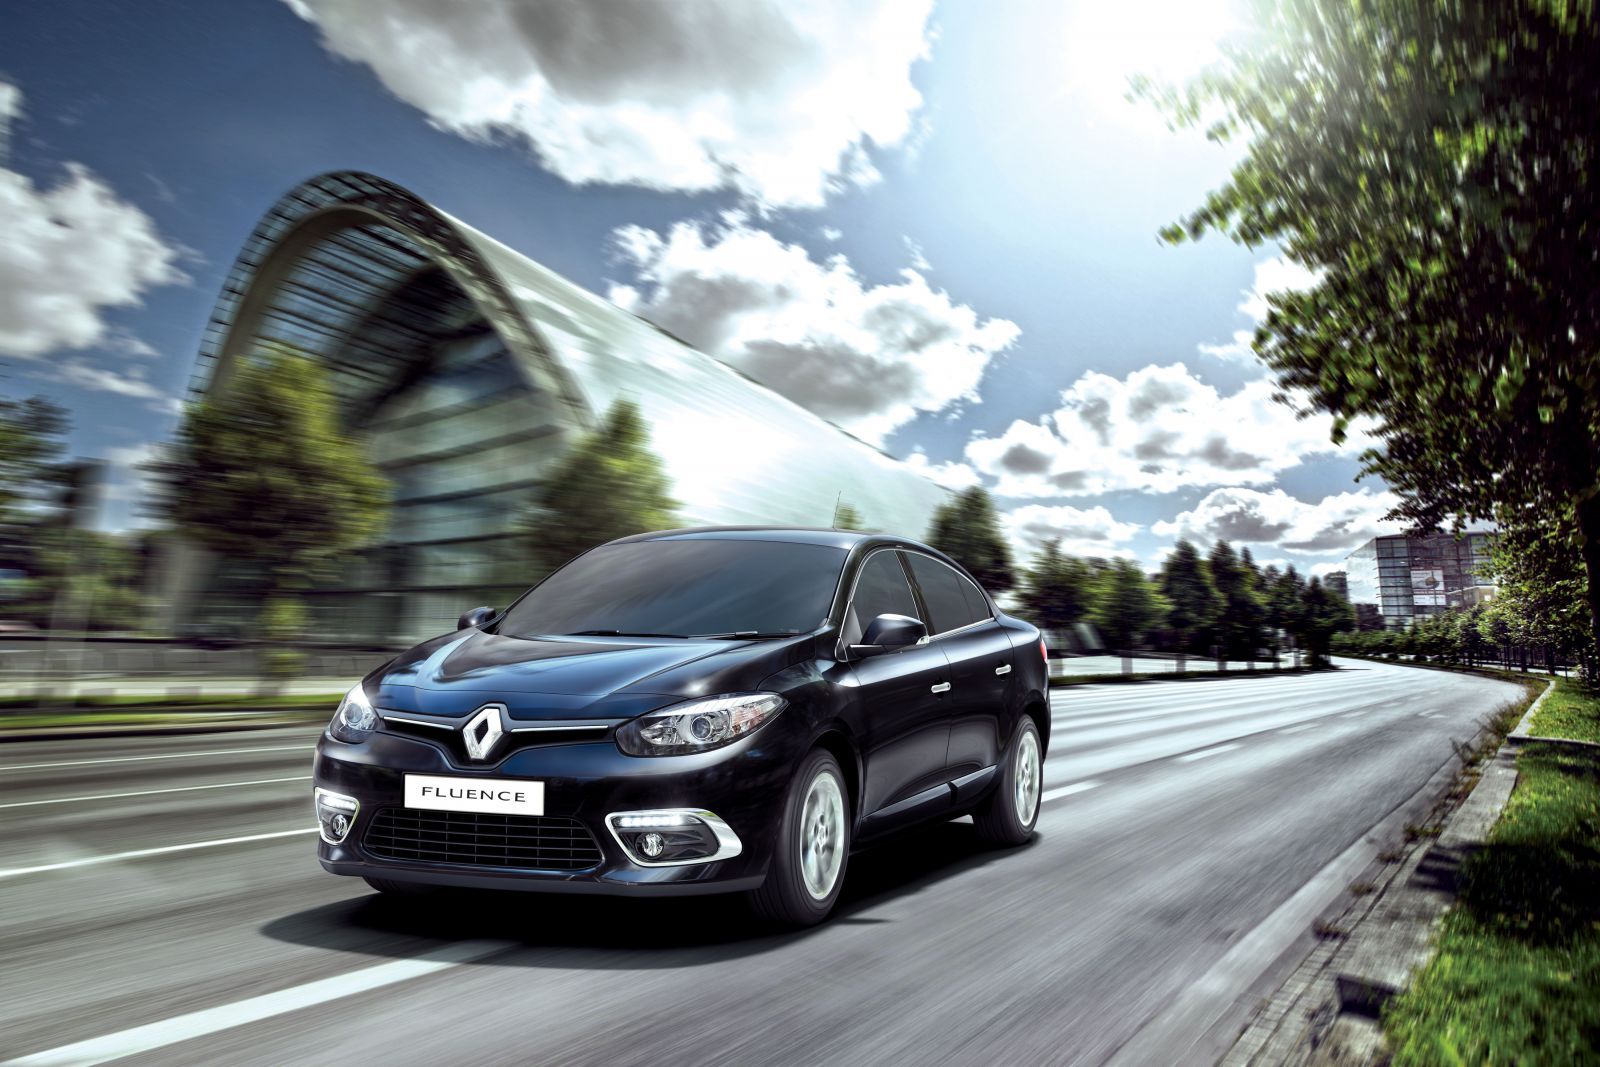 Renault Fluence facelift